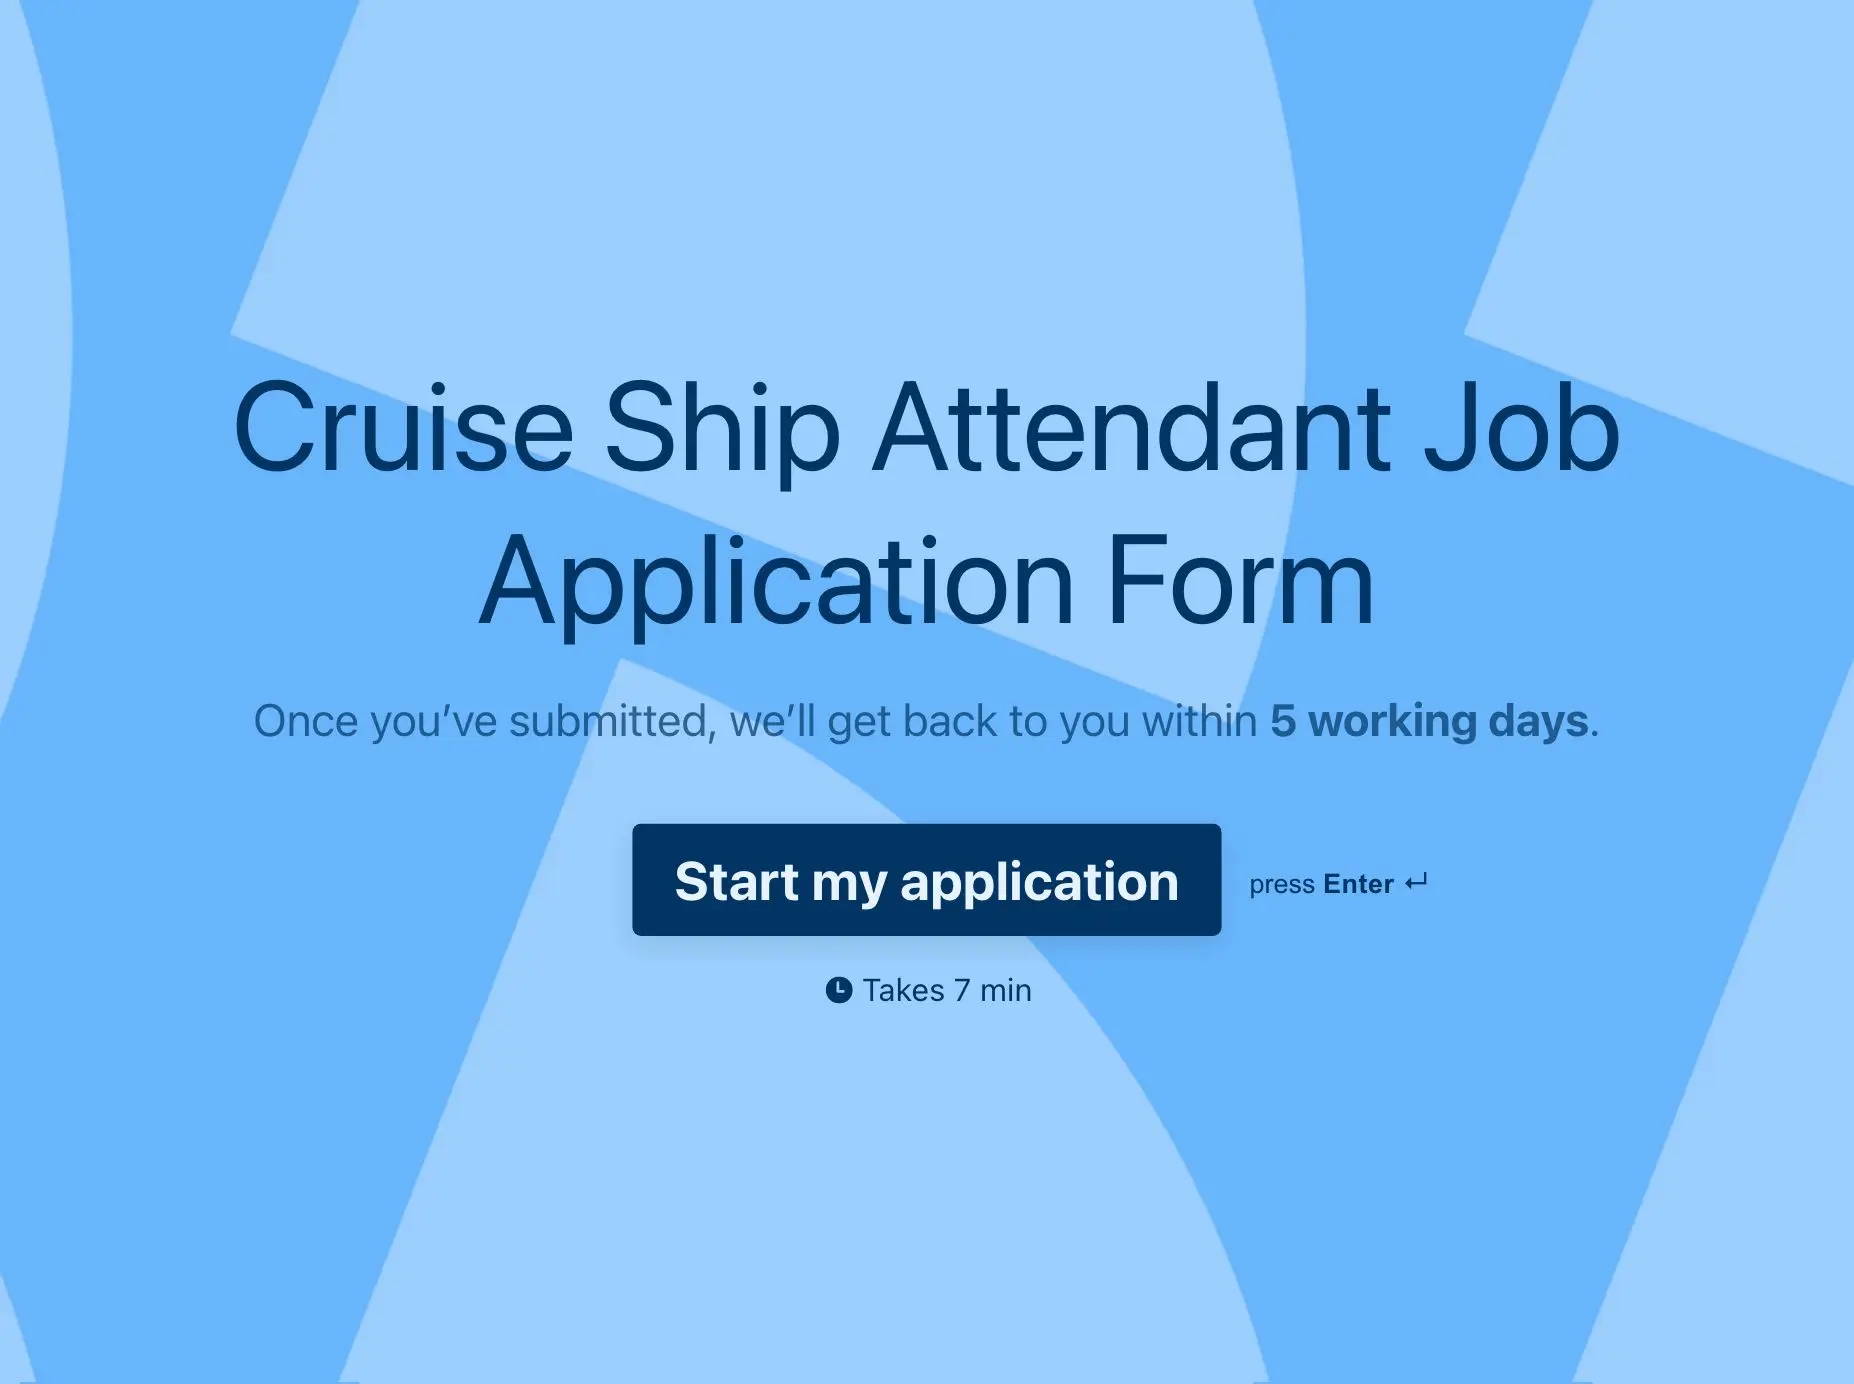 Cruise Ship Attendant Job Application Form Template Hero